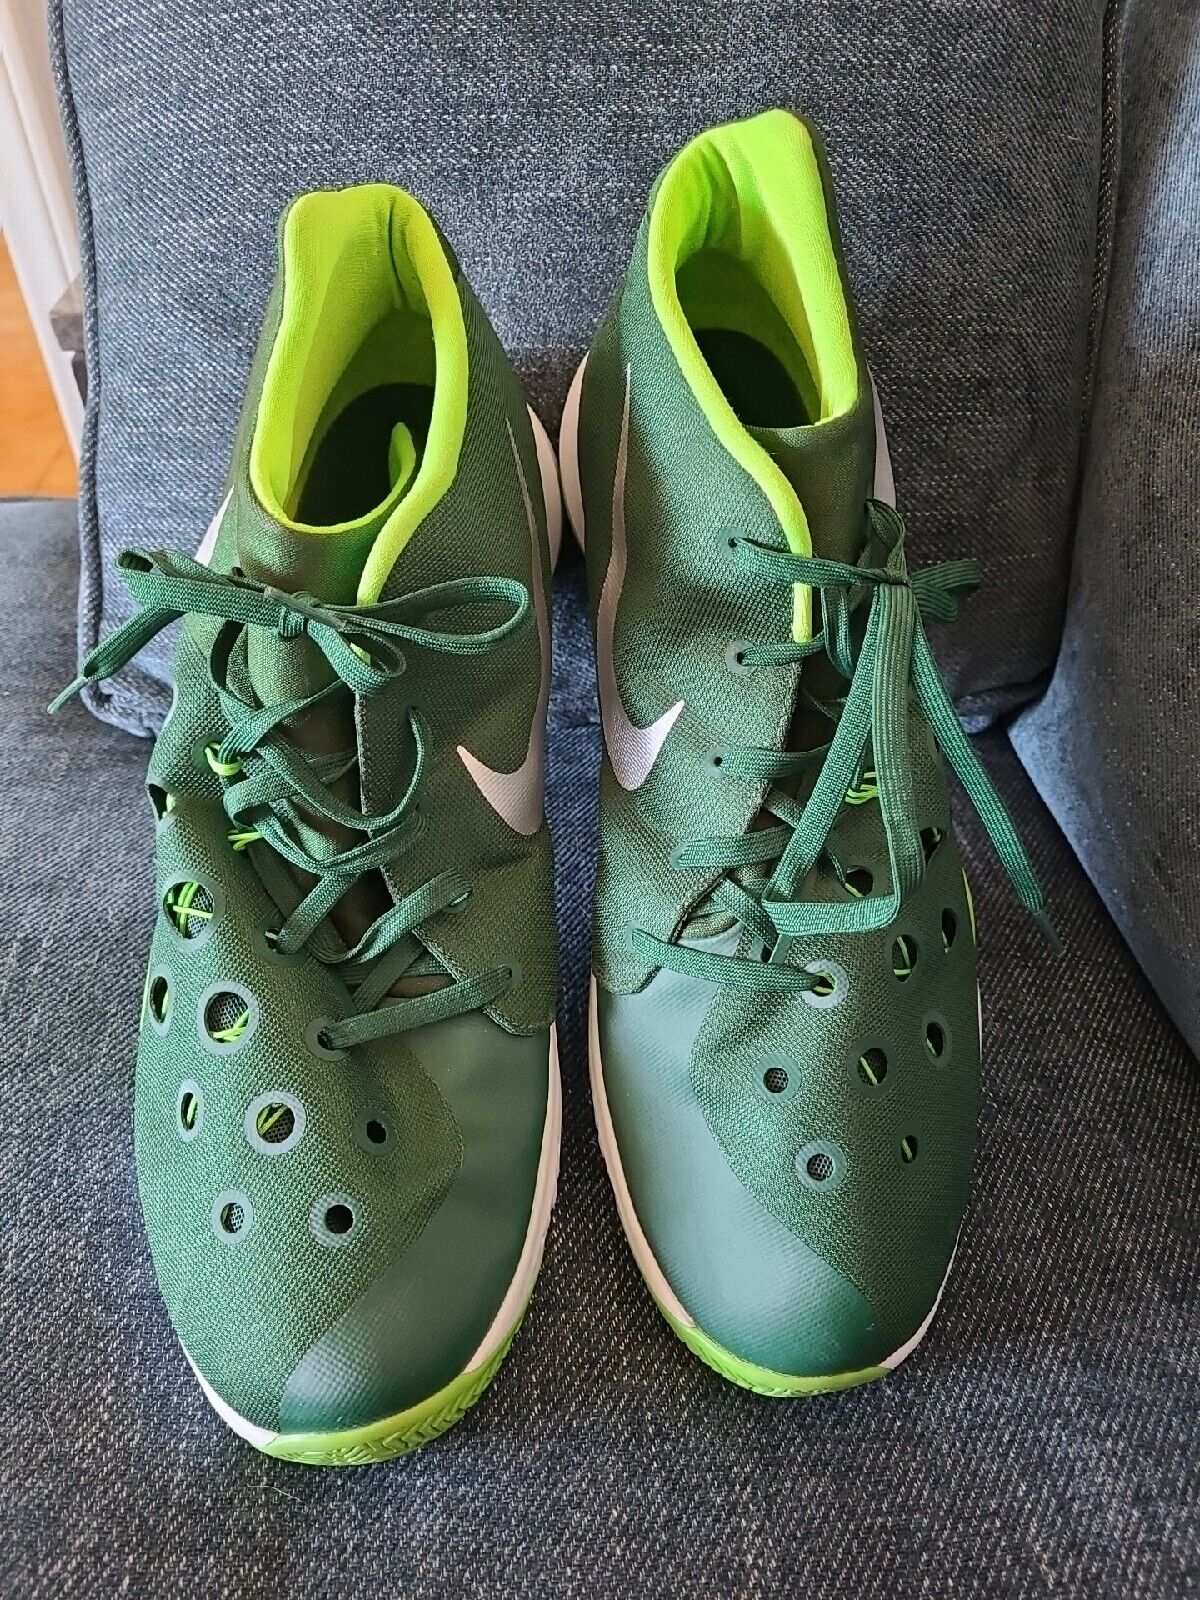 Zoom Hyperquickness Basketball Shoes Green Men Size US 18. 749883-303 eBay